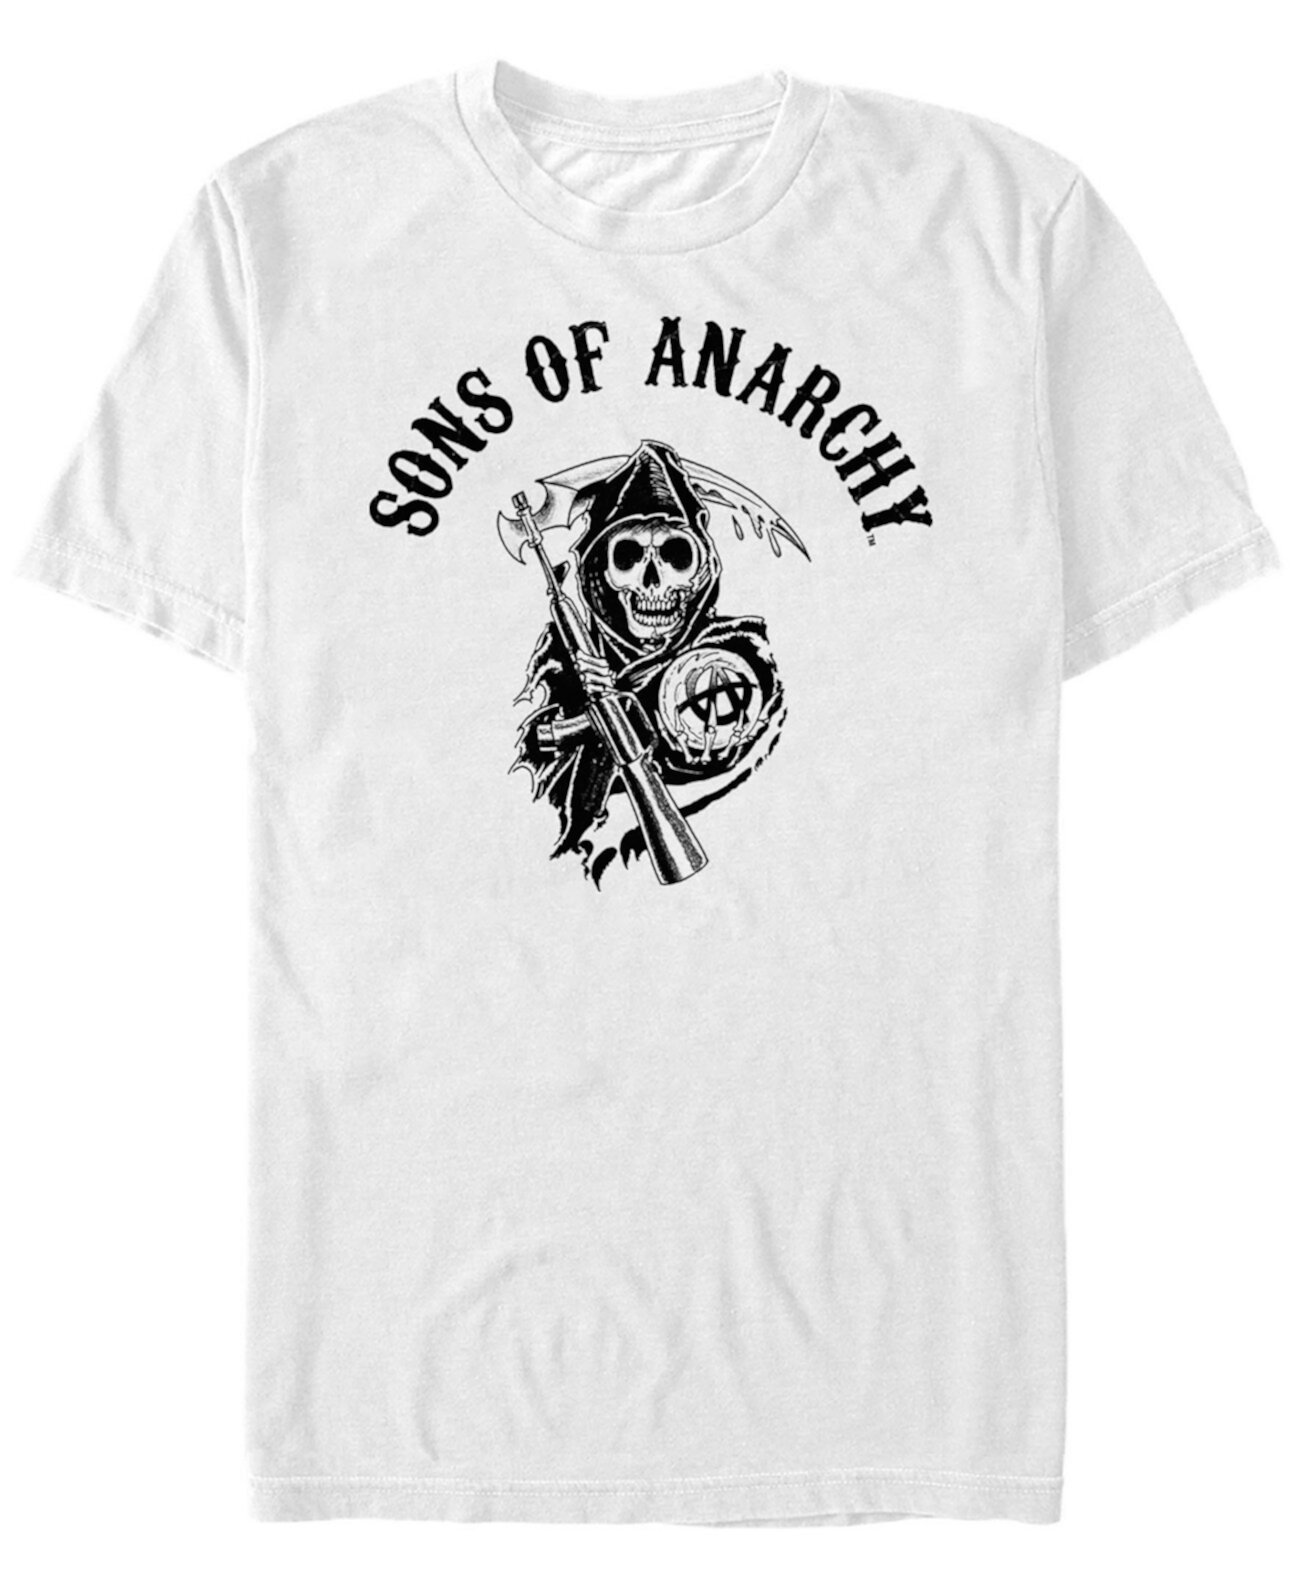 Мужская футболка с короткими рукавами и нашивкой Grim Reaper Sons of Anarchy